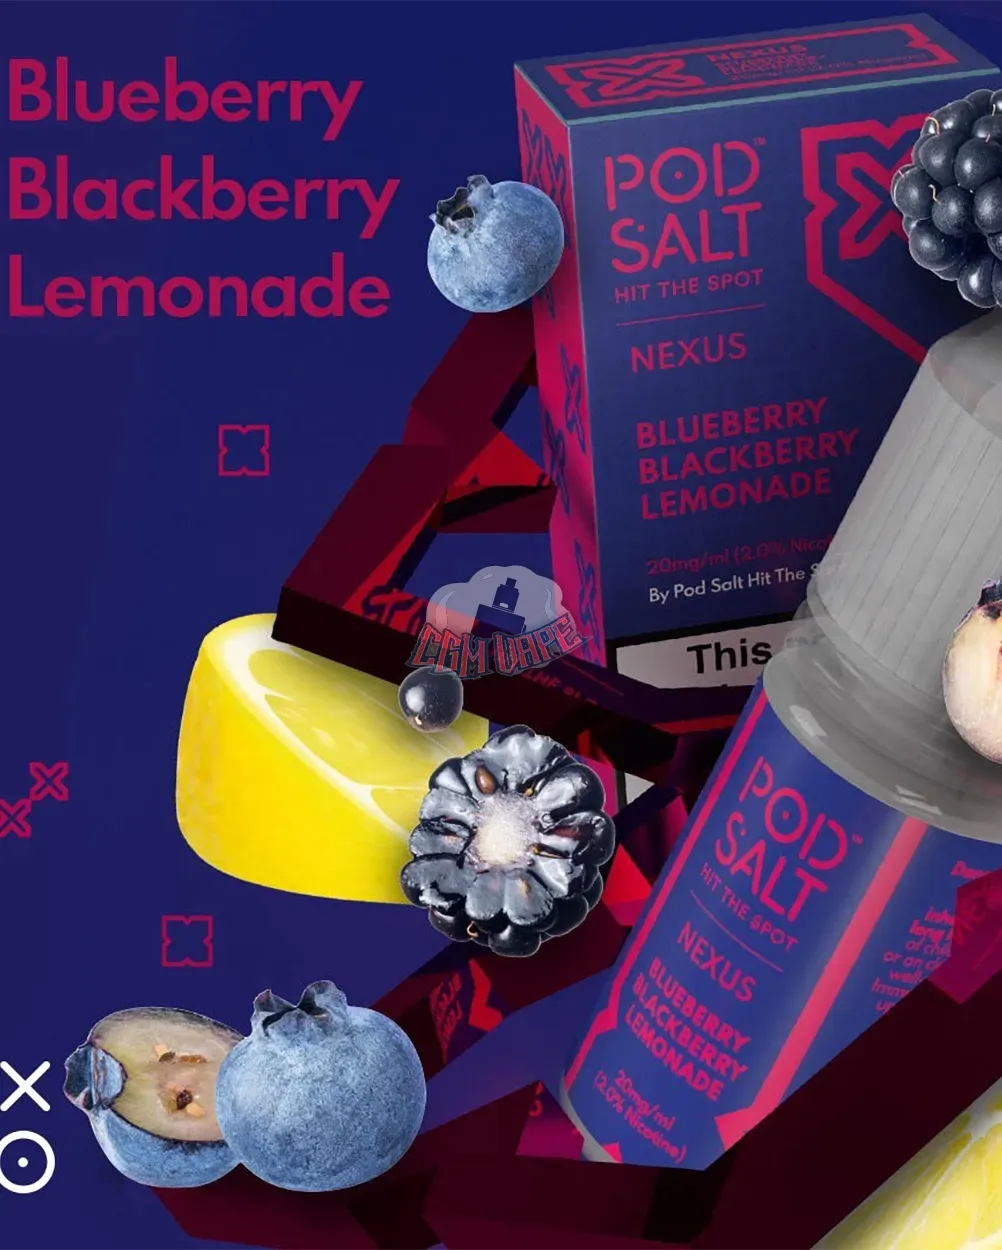 Pod Salt Nexus Blueberry Blackberry Lemonade